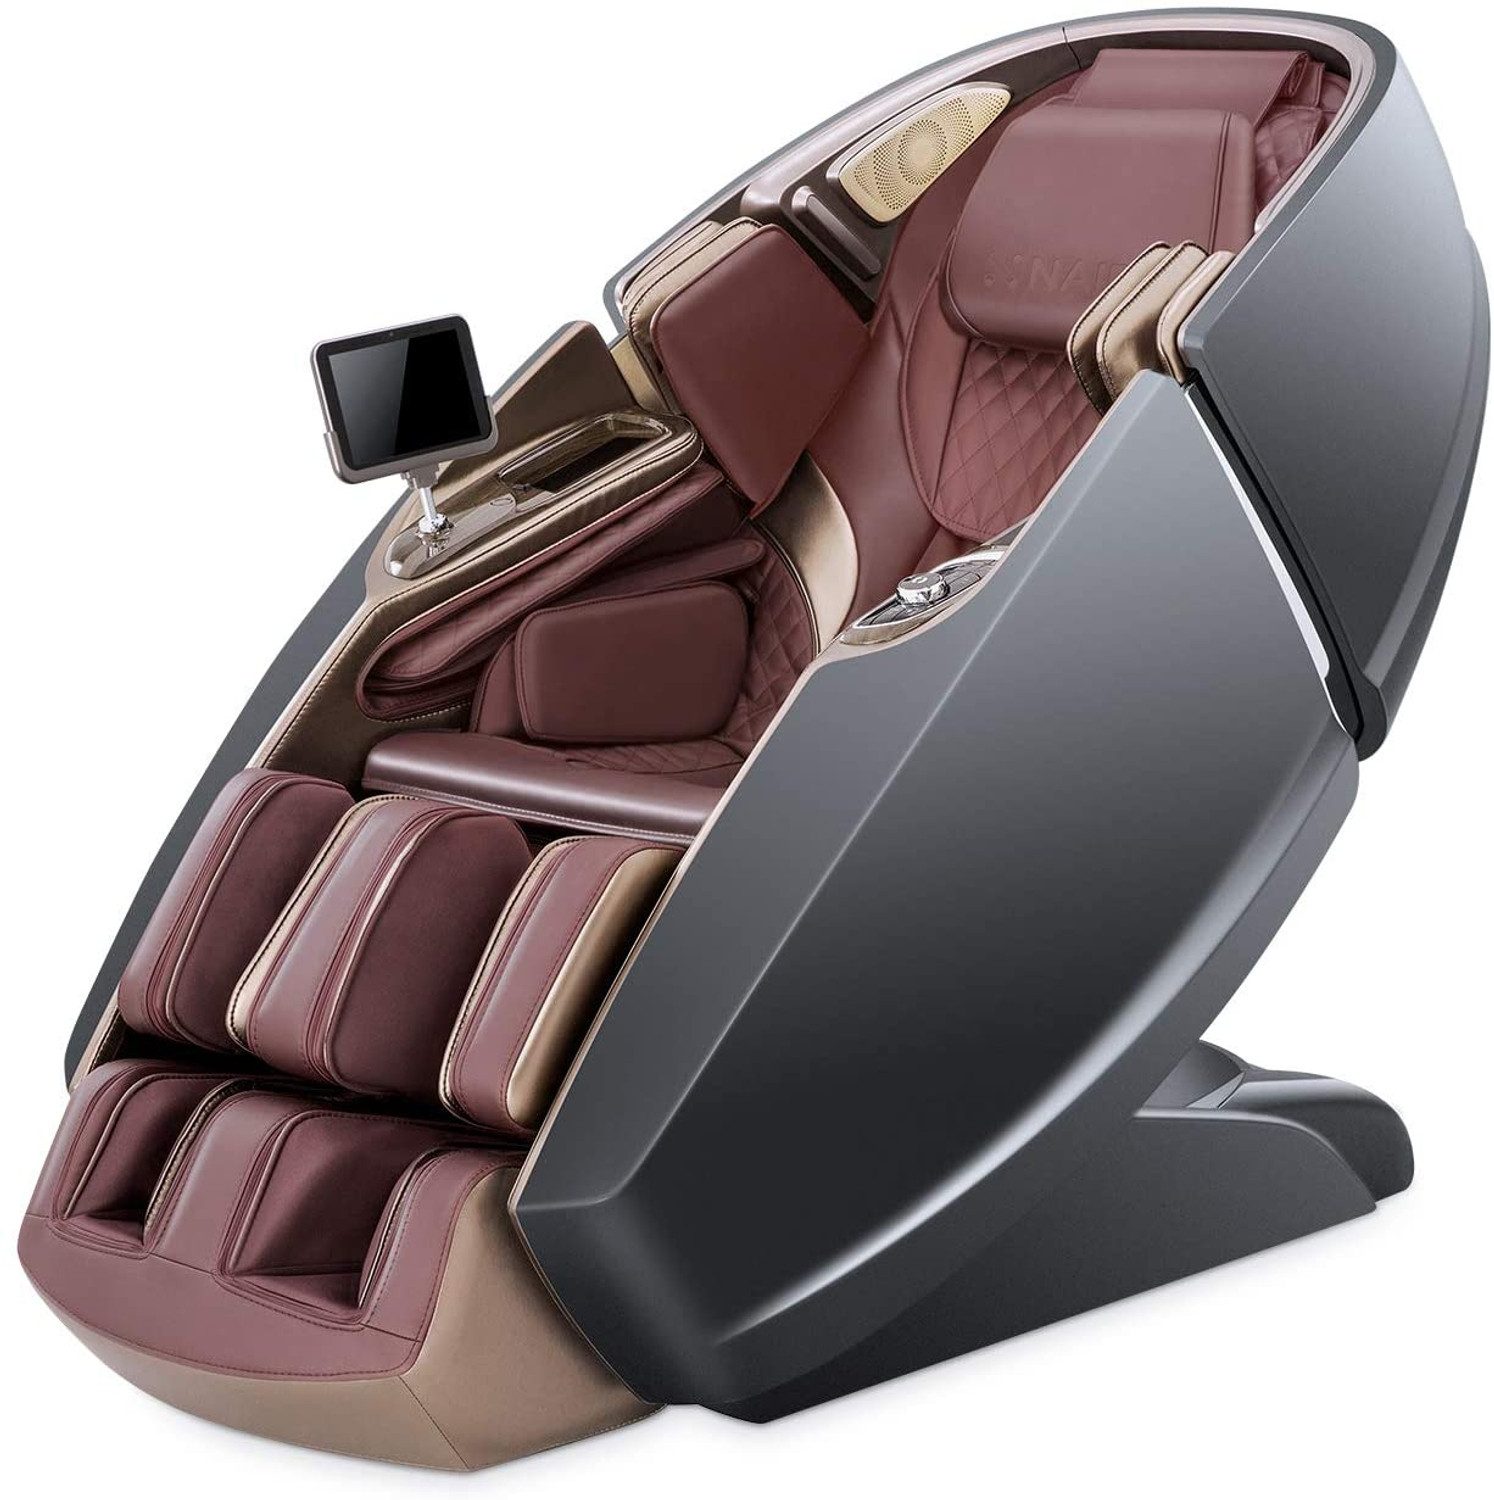 NAIPO Massagesessel 3D mit Aufbauservice, High-End Massagestuhl mit Tablet